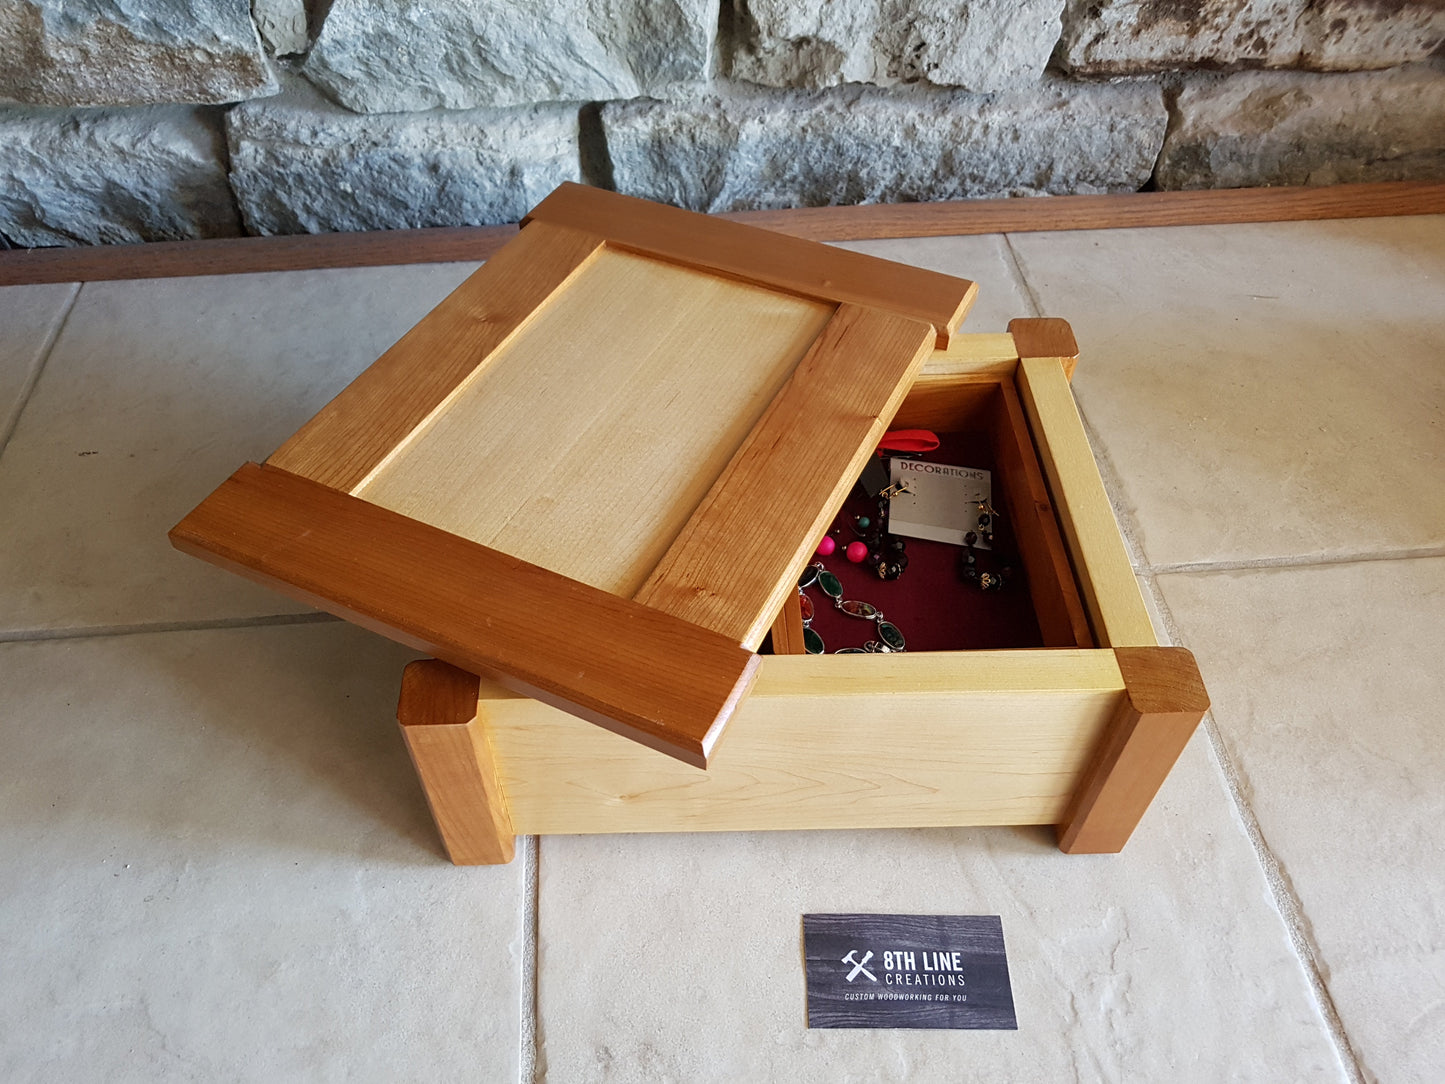 Maple and Cherry Jewellery/Keepsake Box Keepsake Box / Jewellery Box 8th Line Creations 